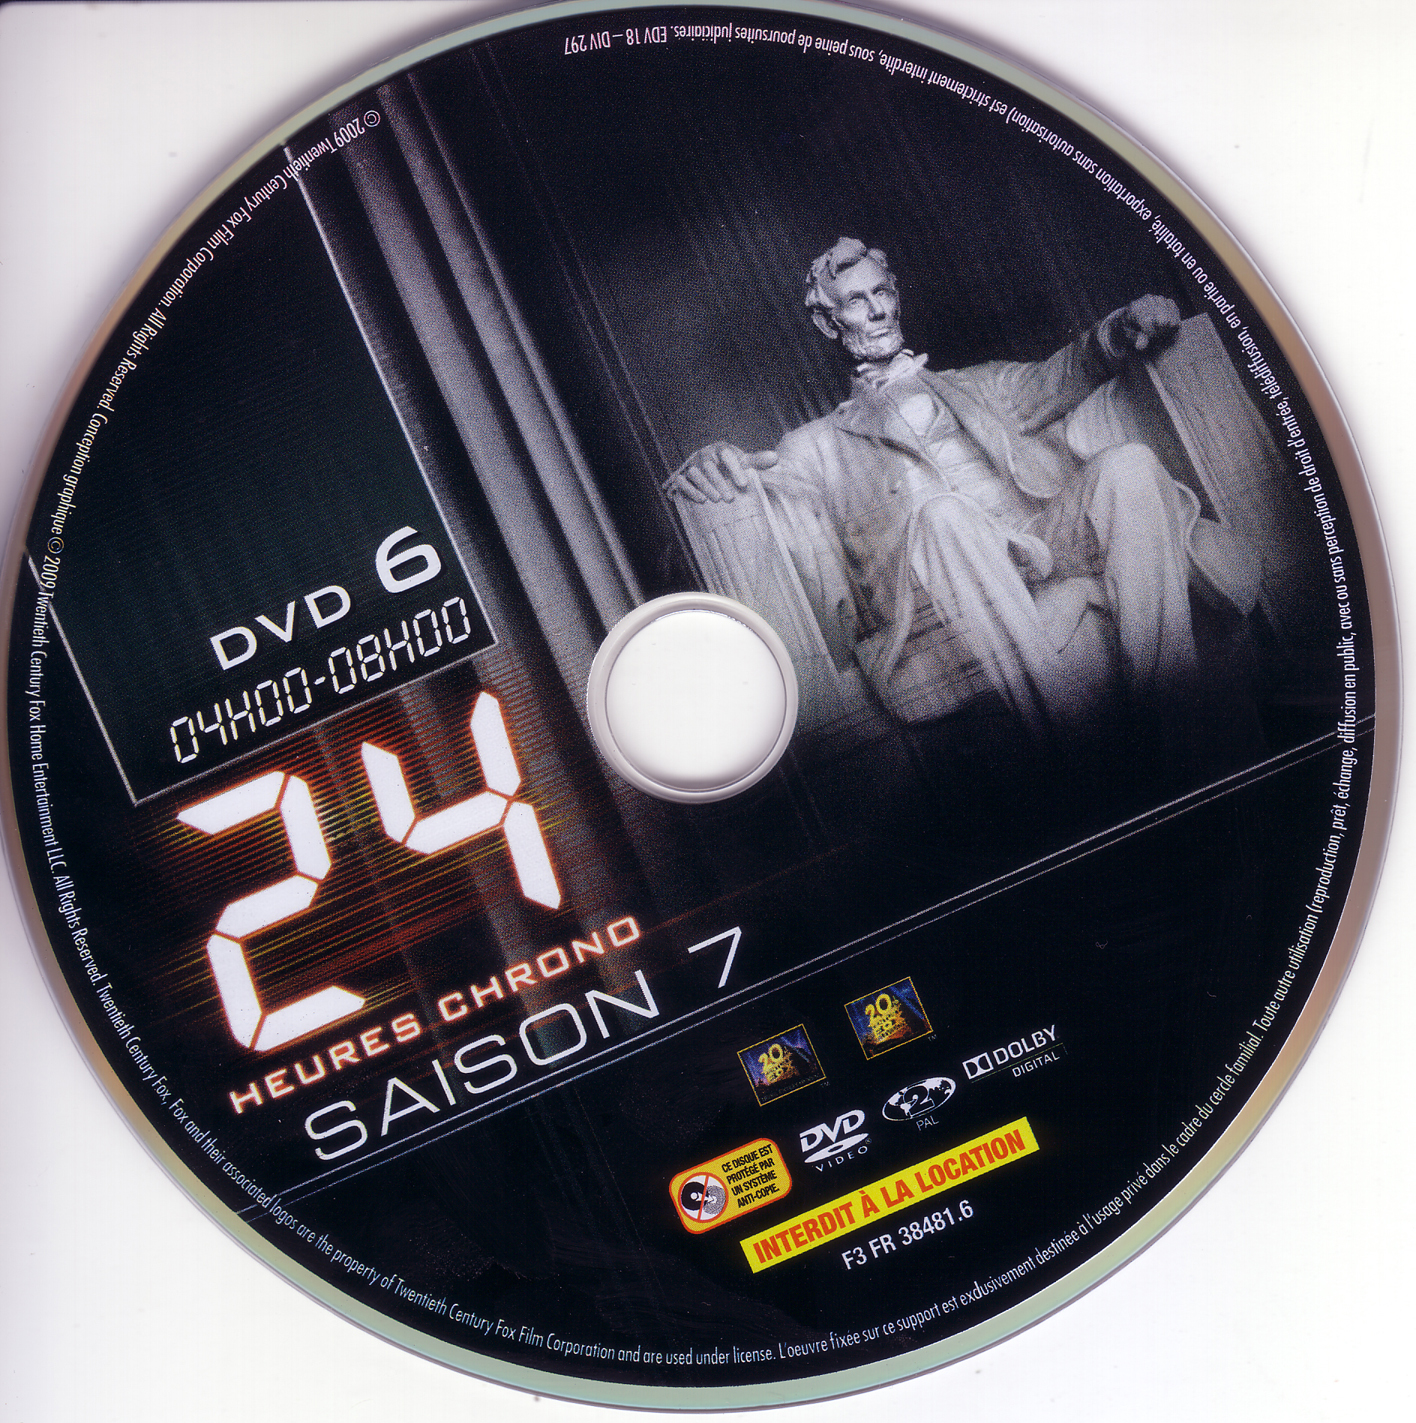 24 heures chrono Saison 7 dvd 6